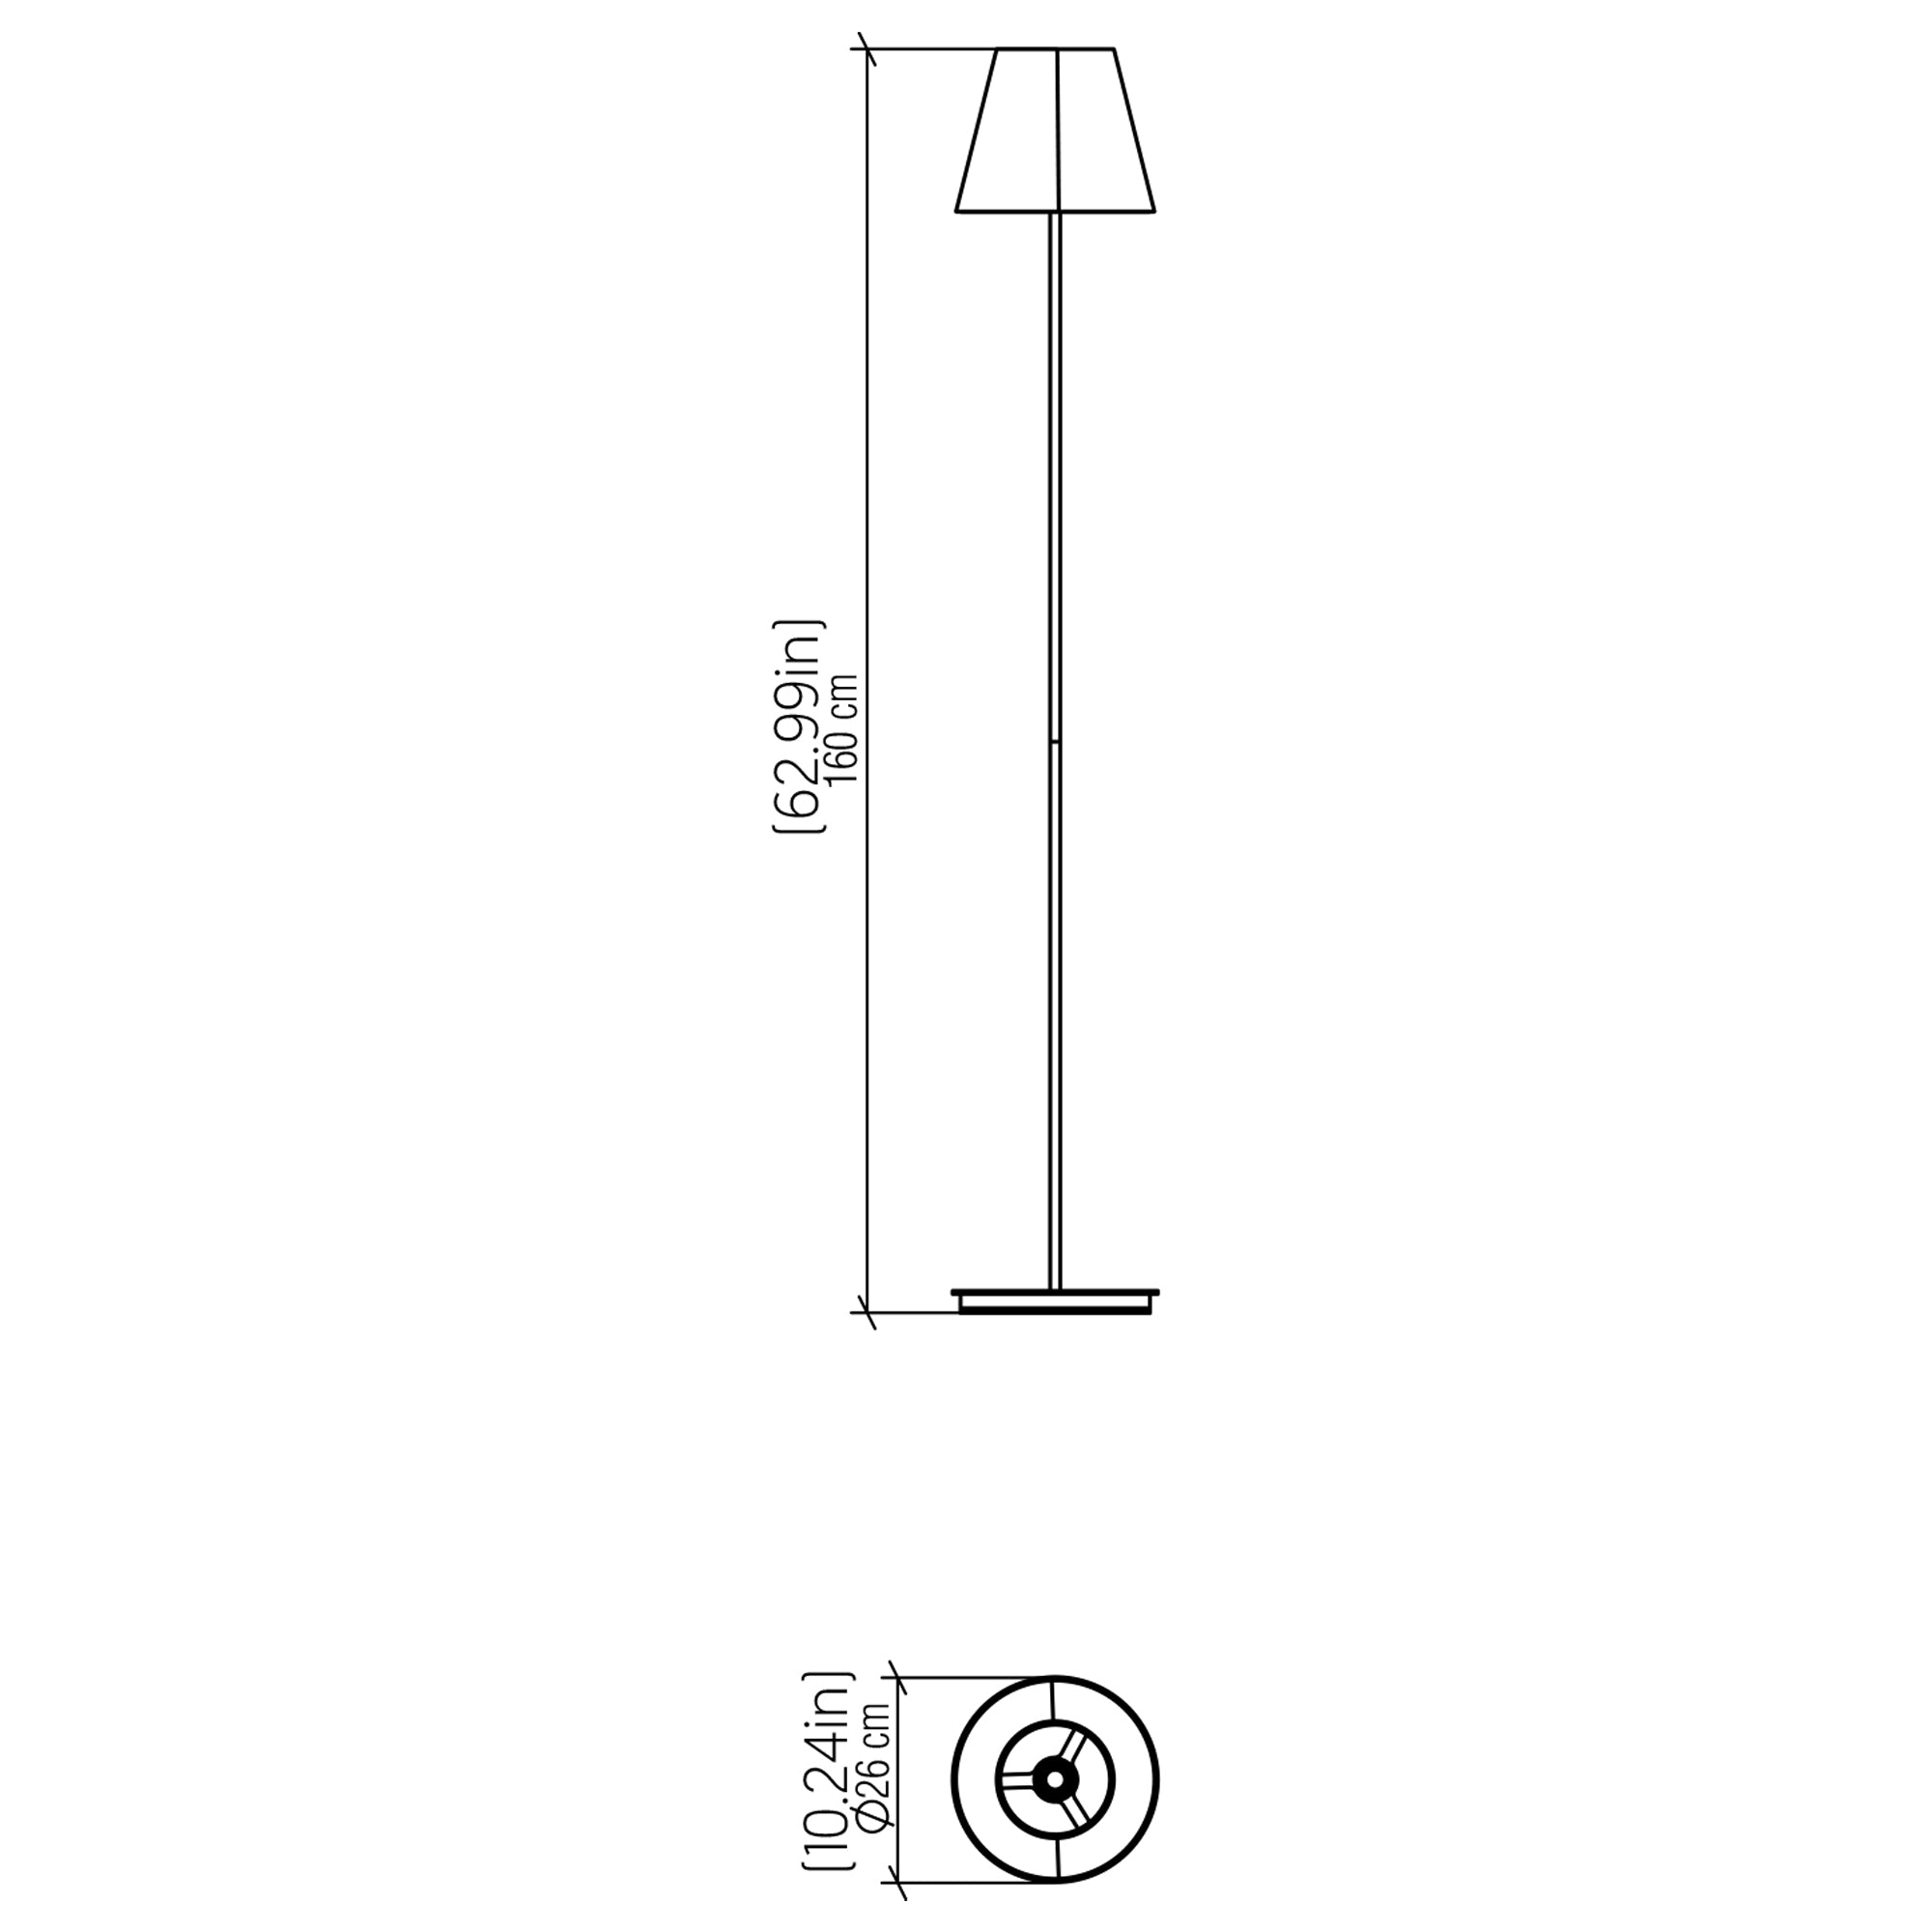 Specificaiton Banner Conica Floor Lamp